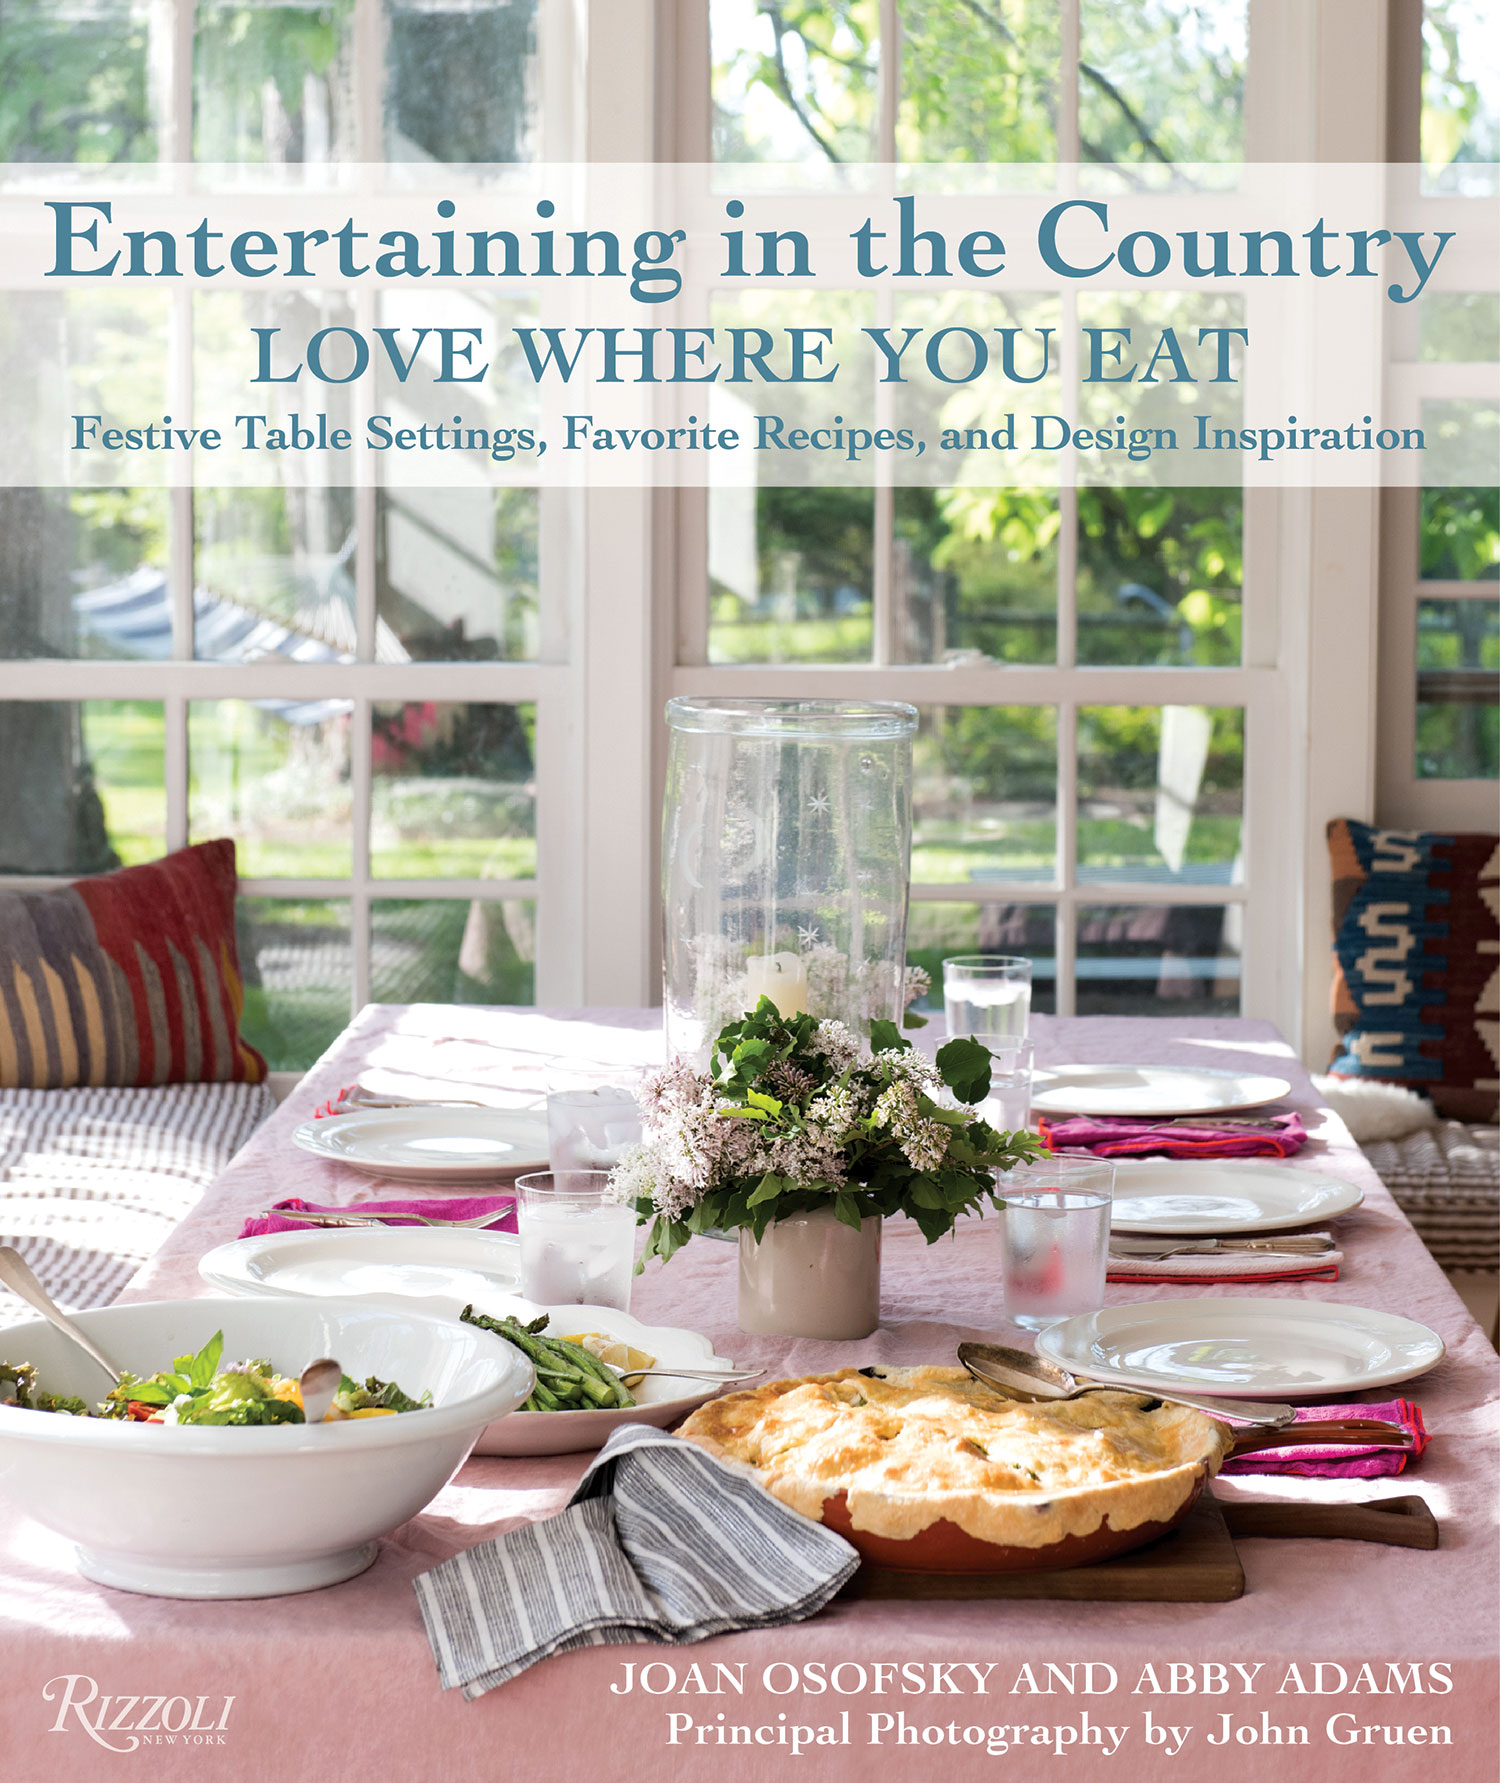 Cover of James Farmer's Celebrating Home book